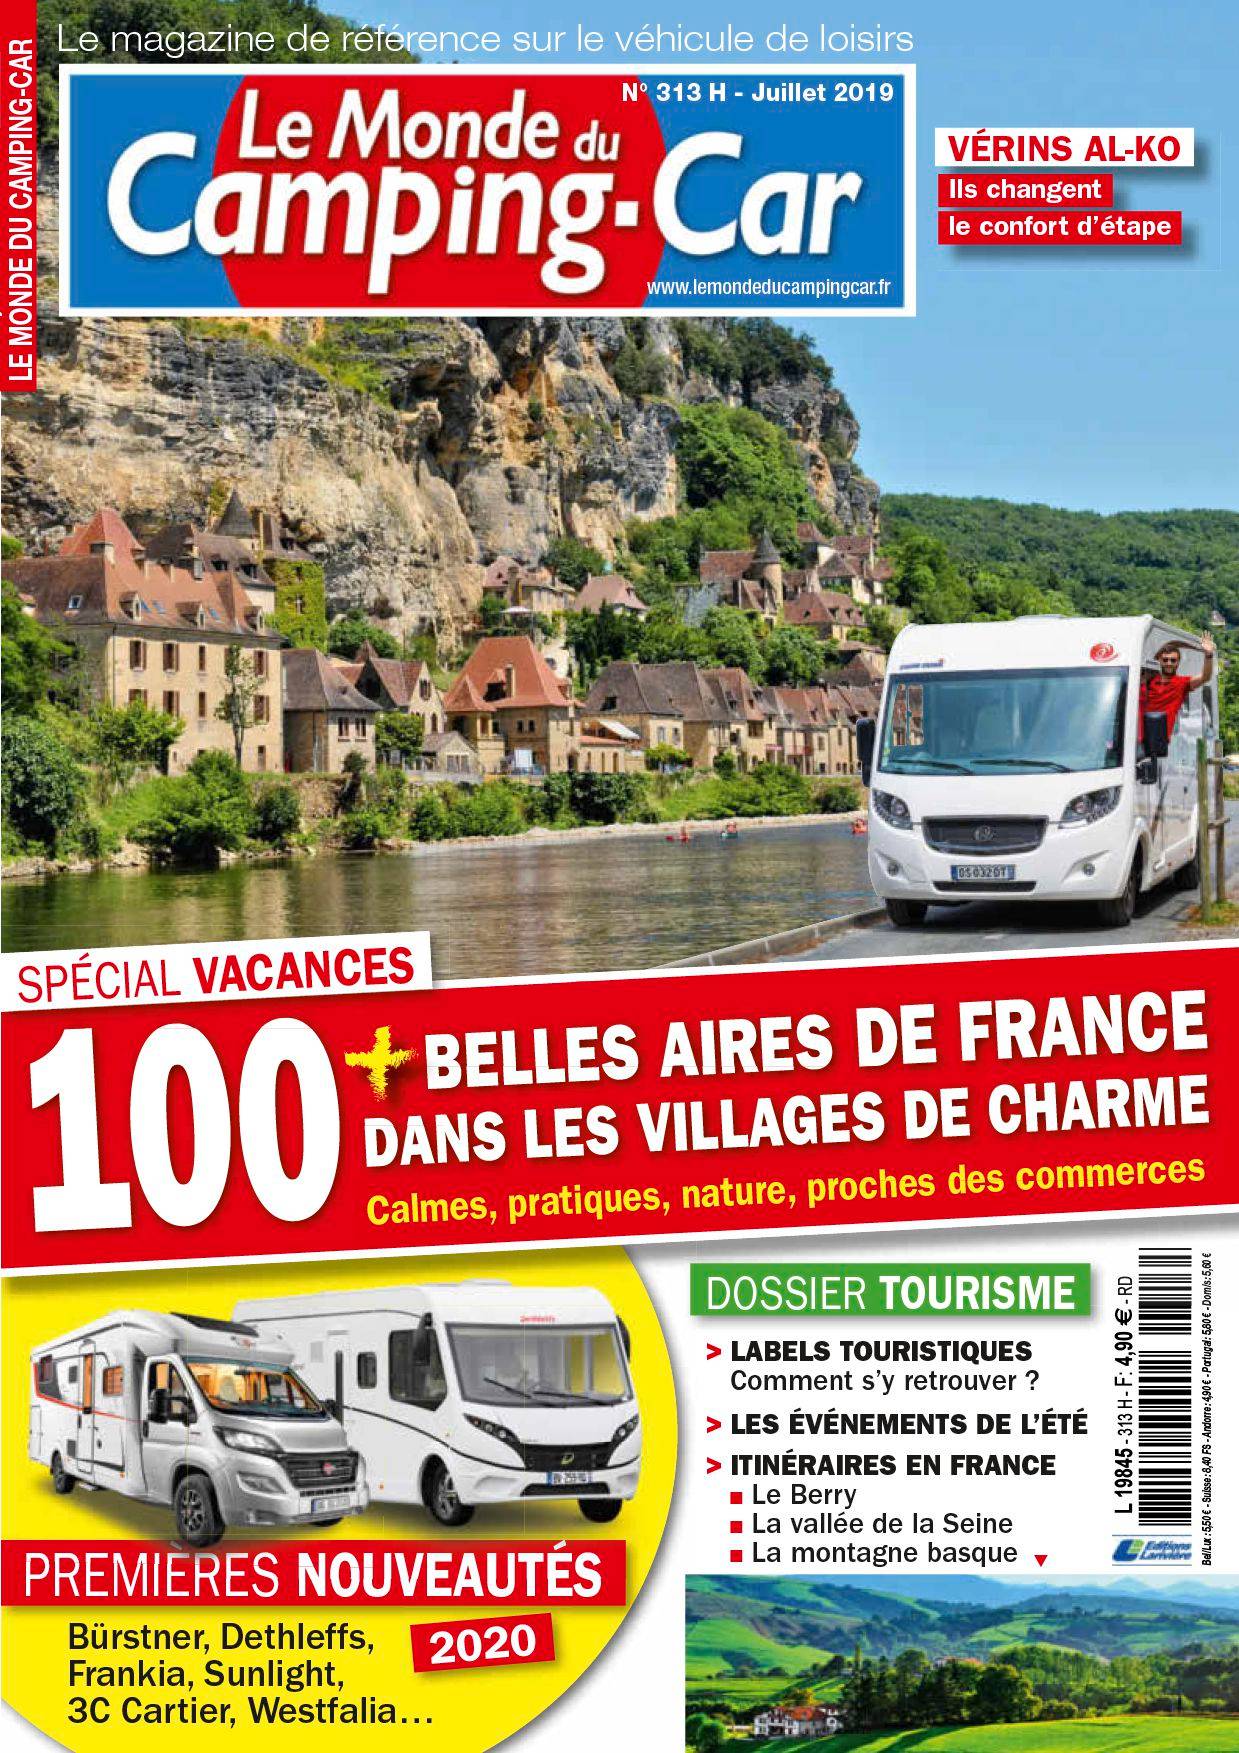 Le Monde du Camping Car n° 313 4.9€